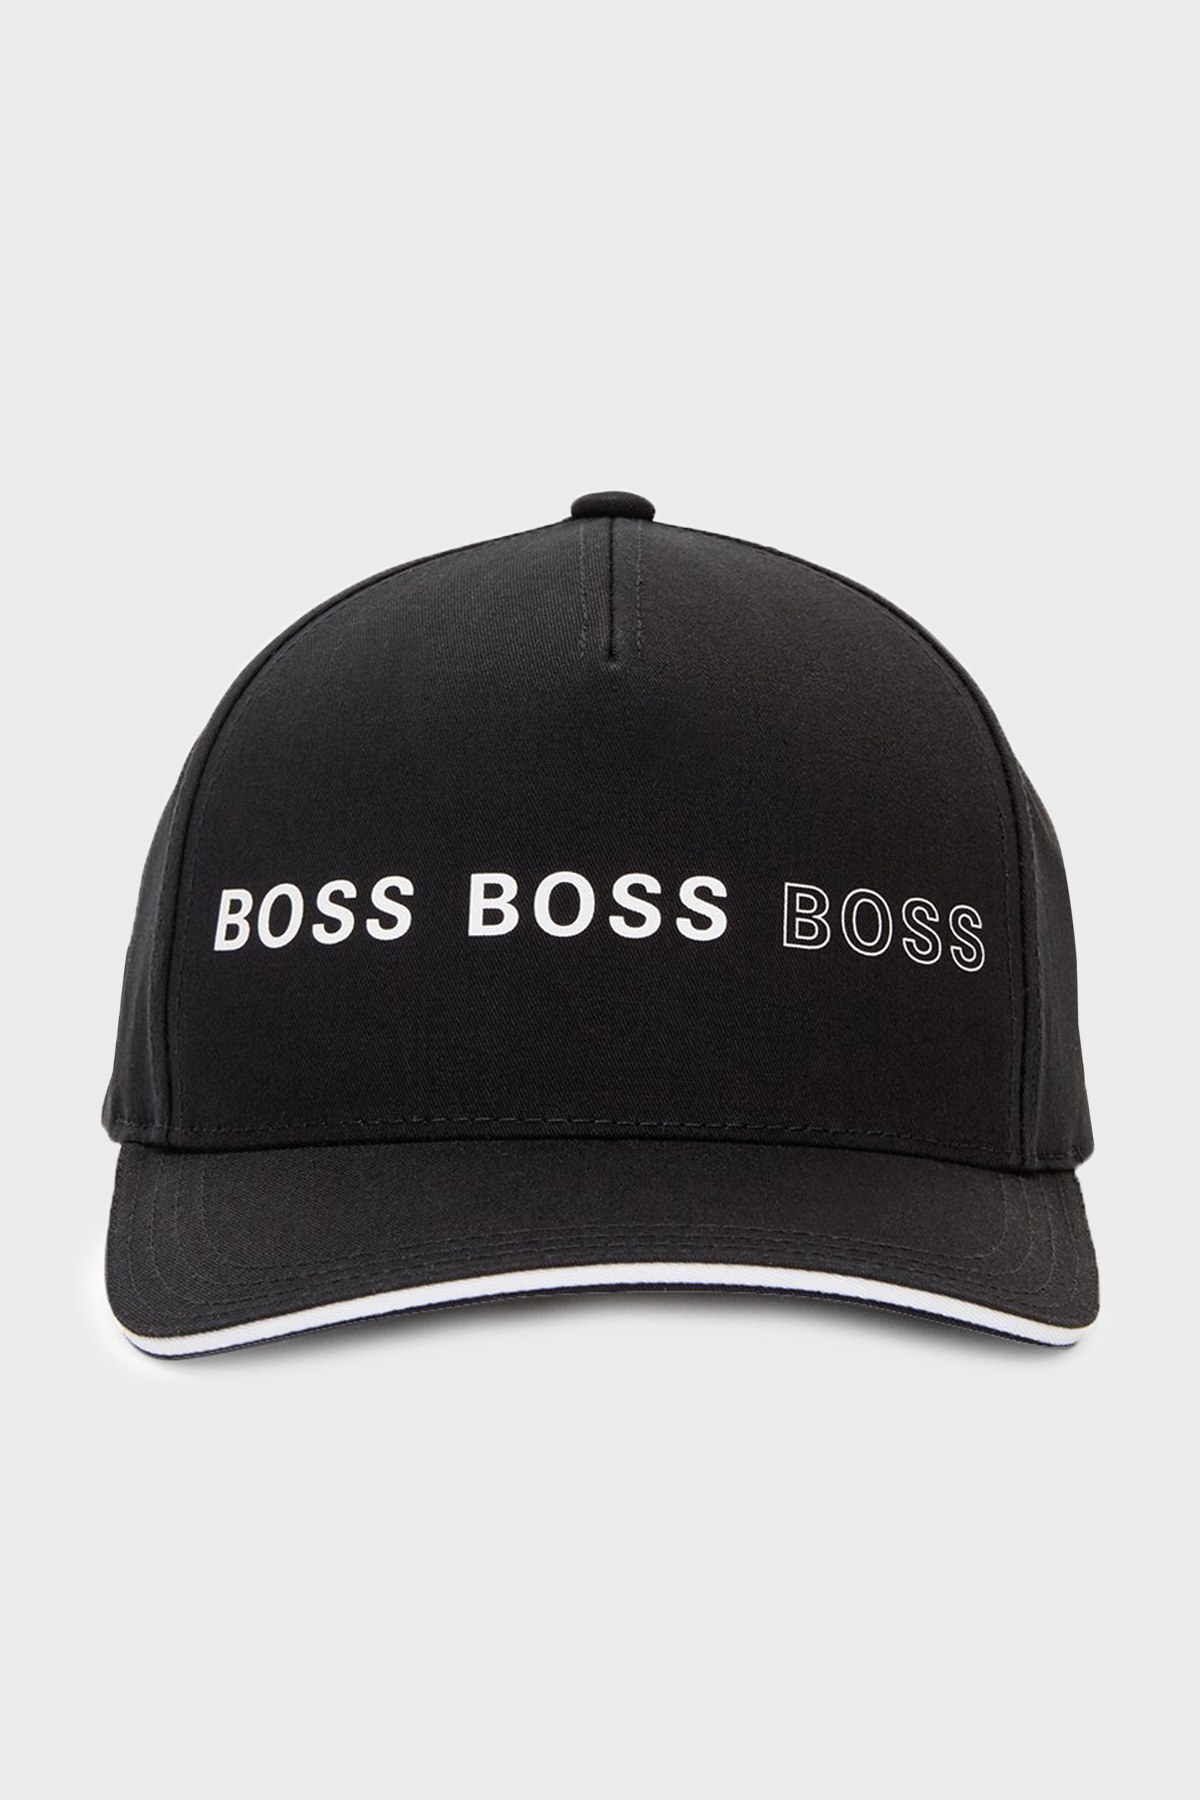 Hugo Boss Marka Logolu Erkek Şapka 50453213 001 SİYAH